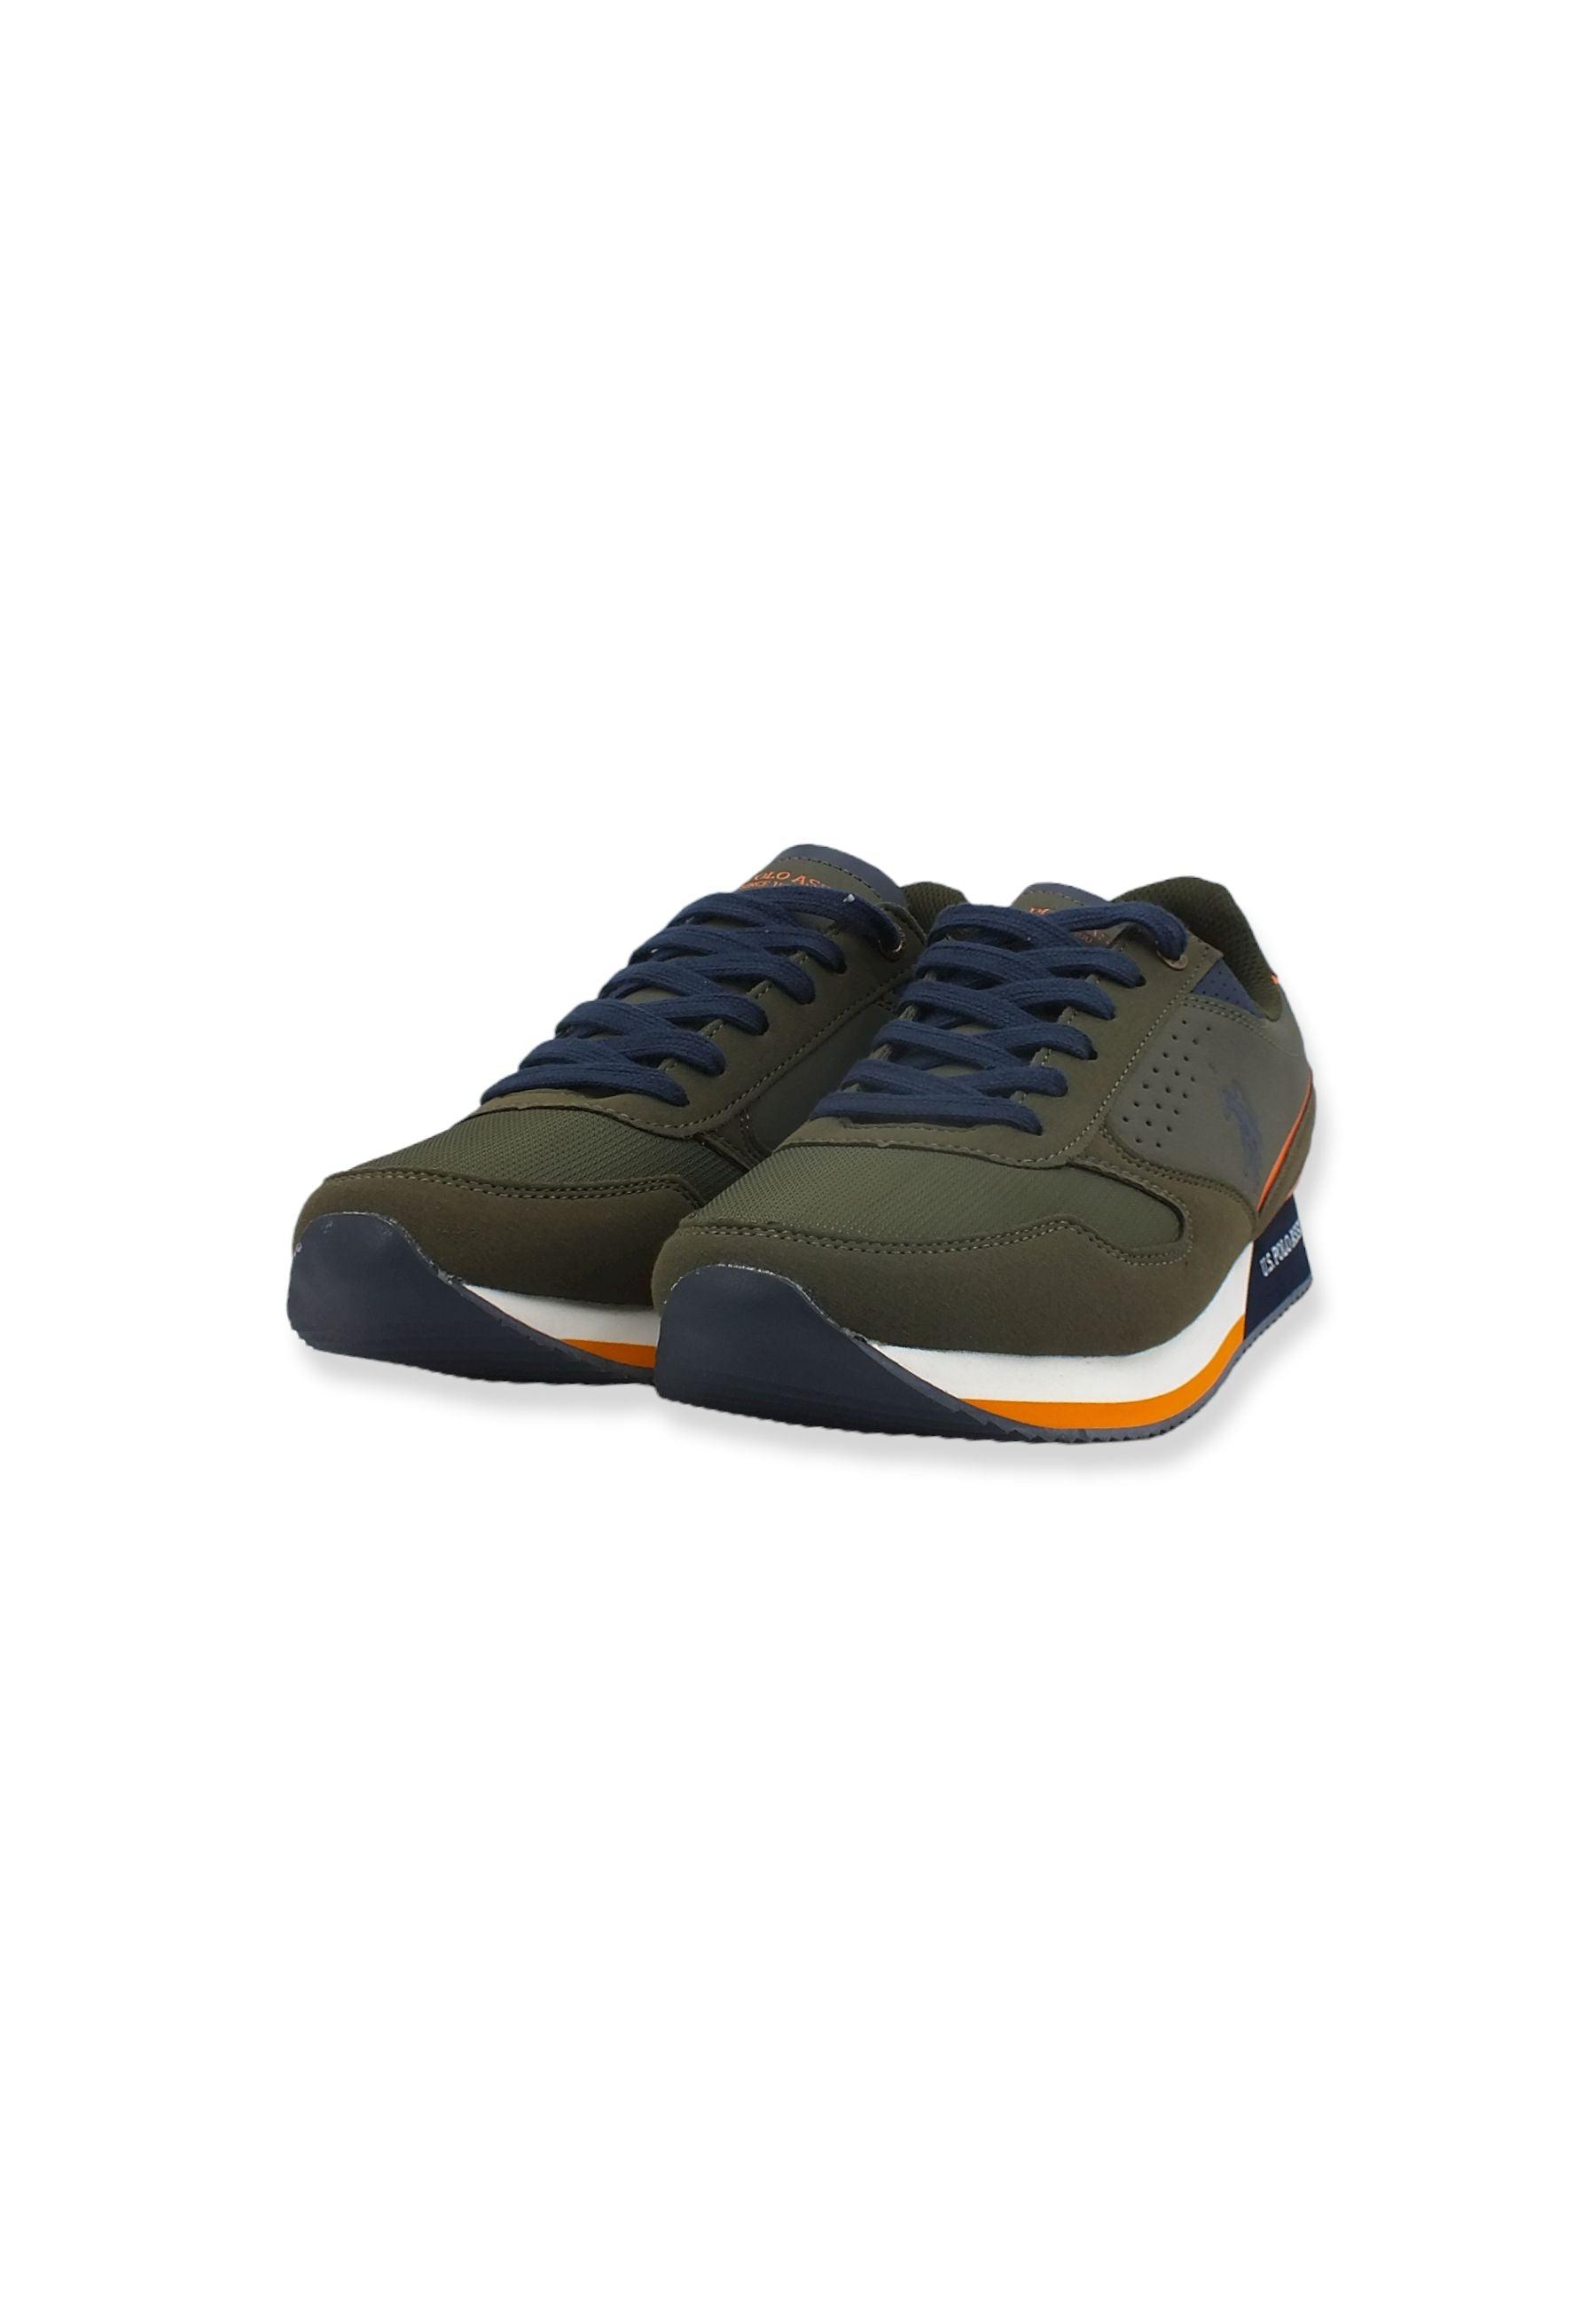 U.S. POLO ASSN. Sneaker Running Uomo Military Green NOBIL003B - Sandrini Calzature e Abbigliamento